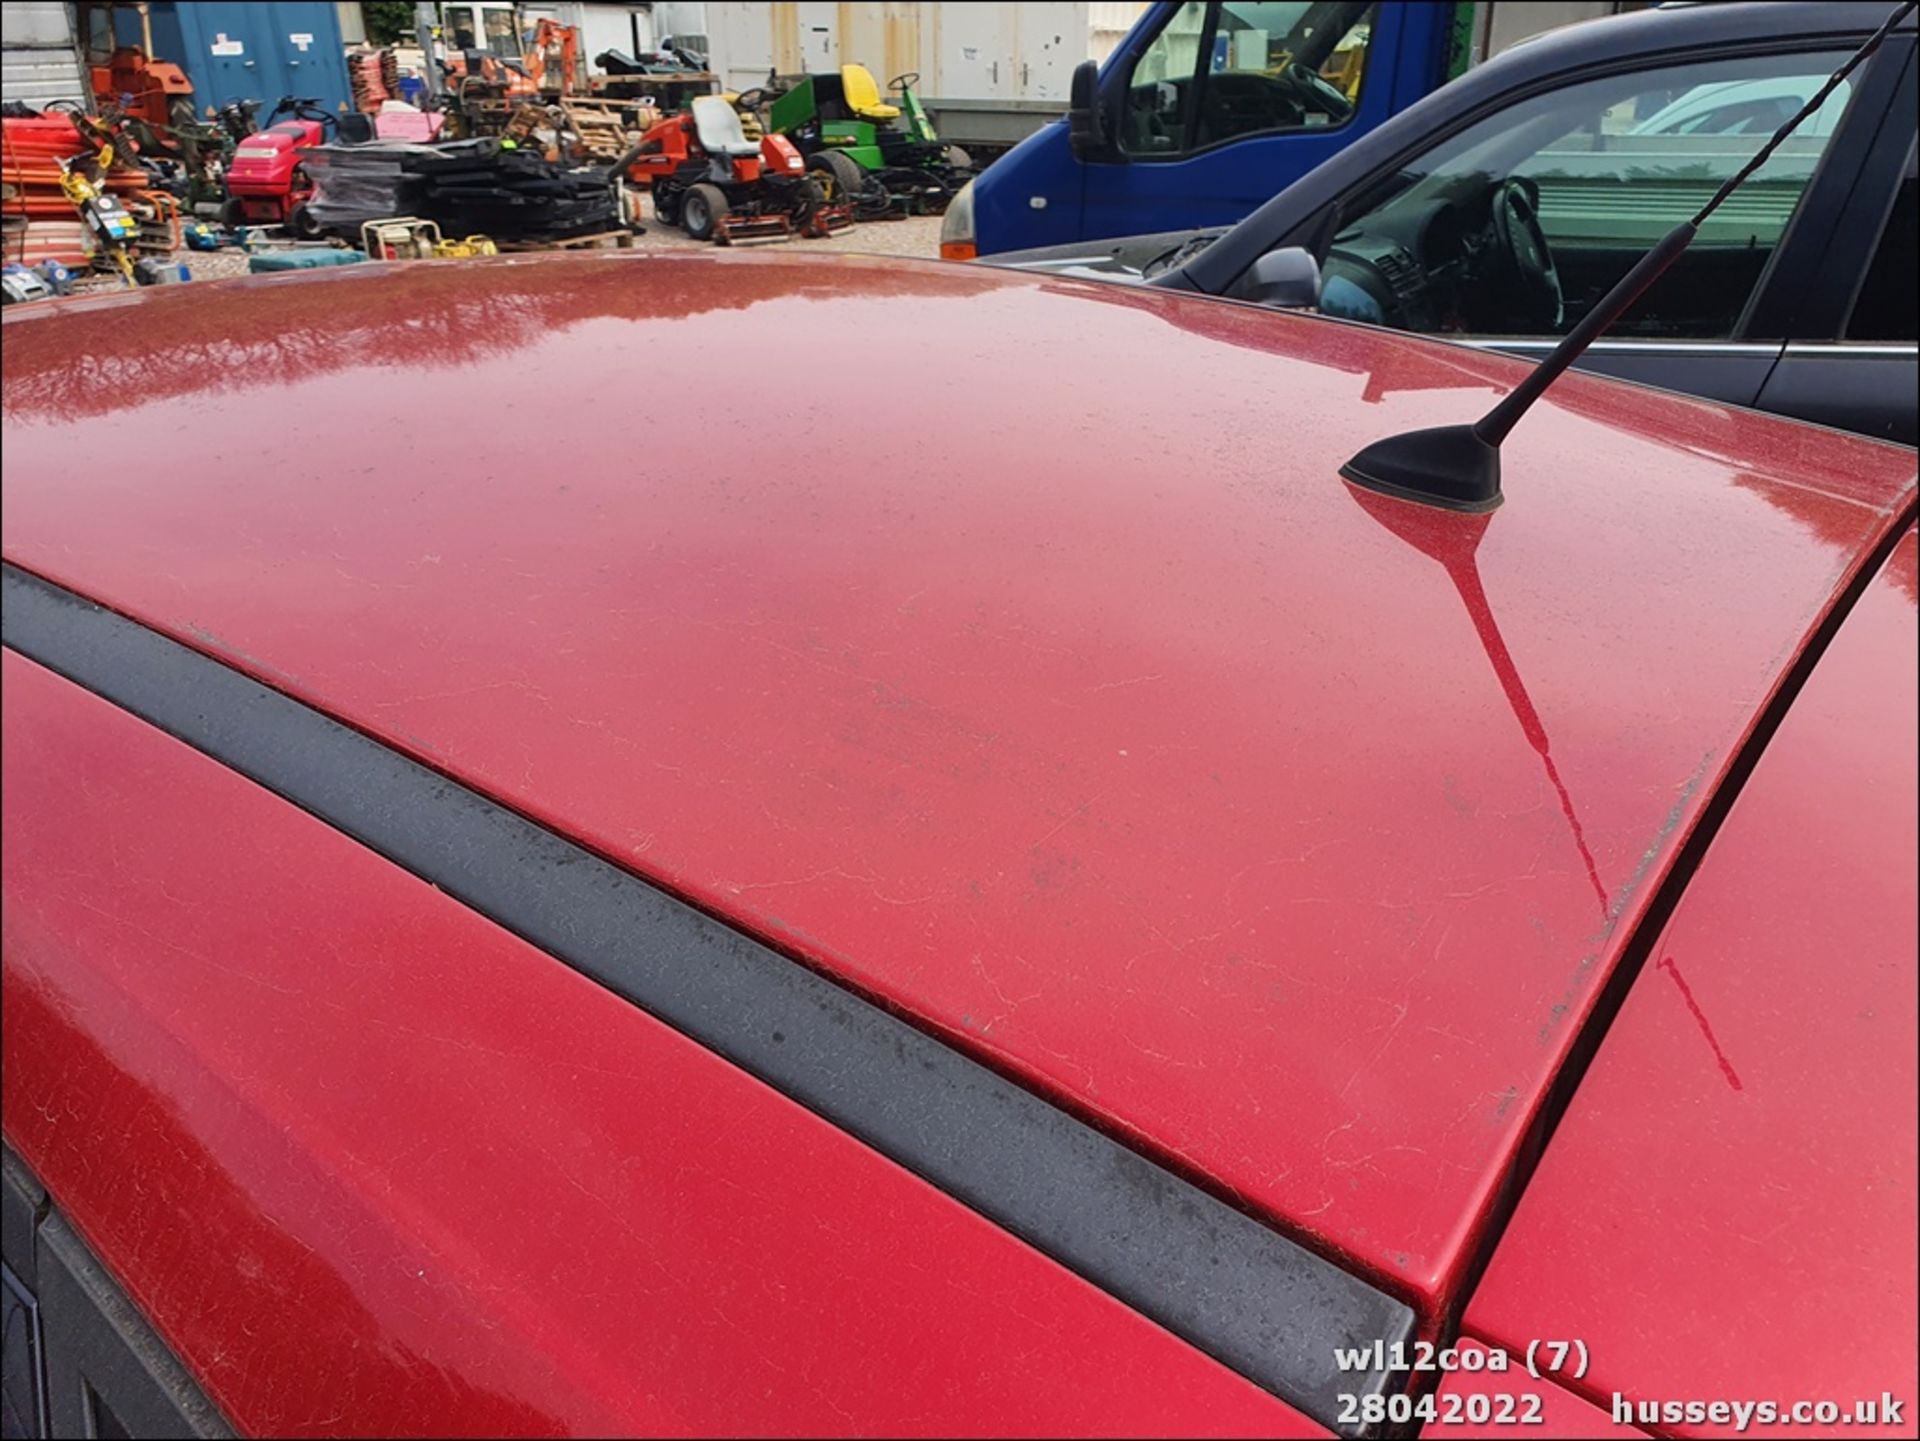 12/12 FORD FOCUS TITANIUM TURBO - 998cc 5dr Hatchback (Red) - Image 8 of 14